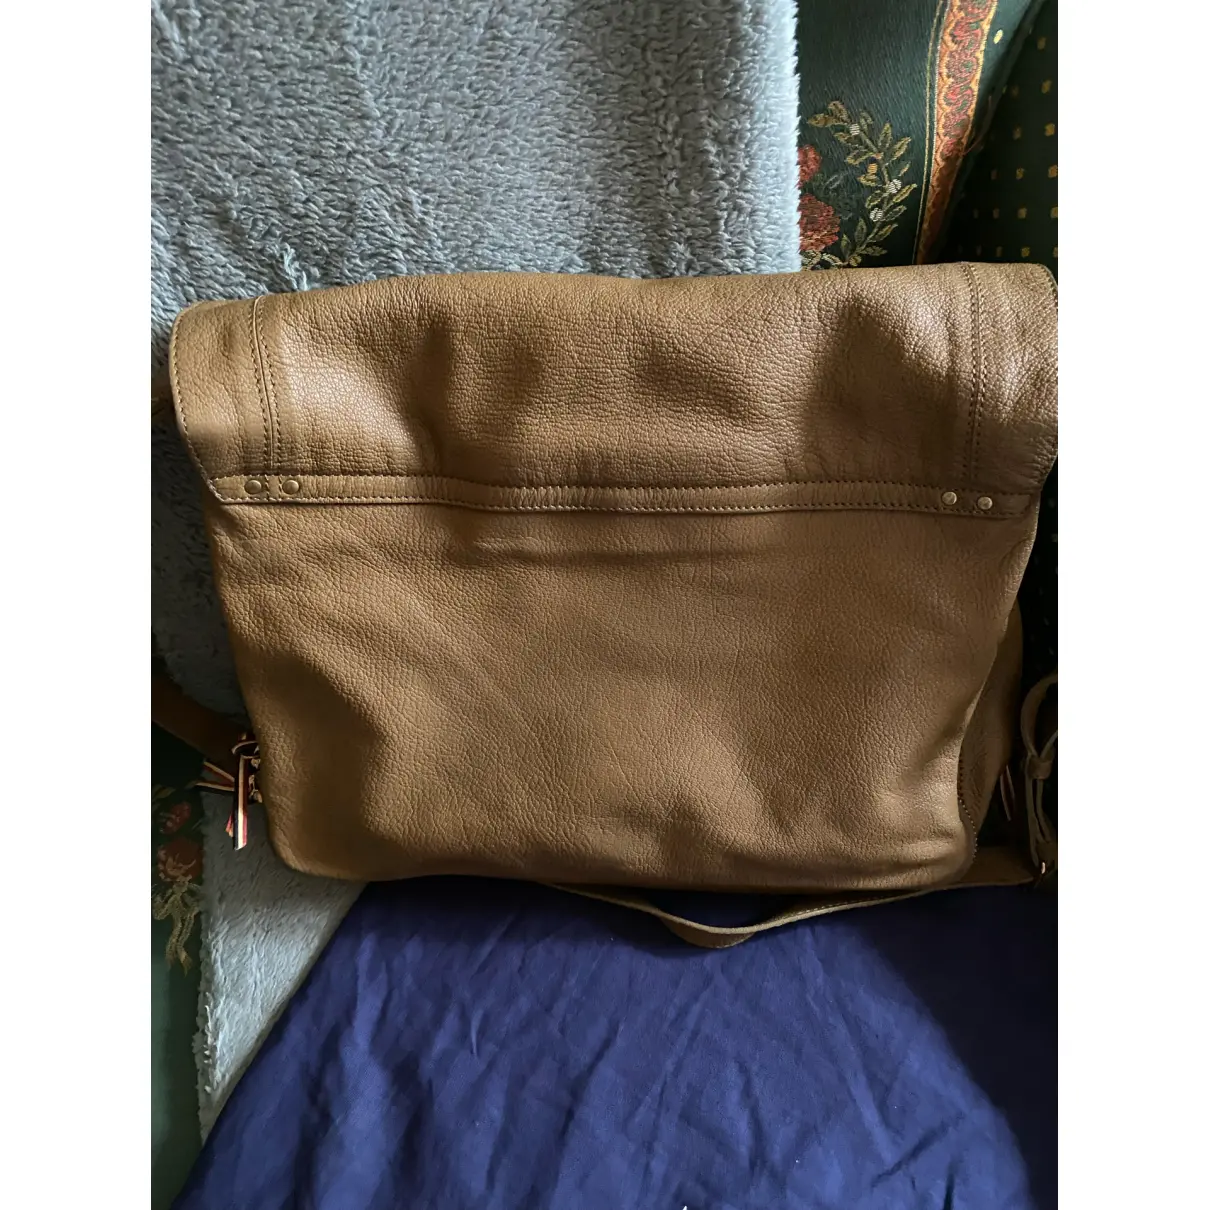 Buy Jerome Dreyfuss Albert leather crossbody bag online